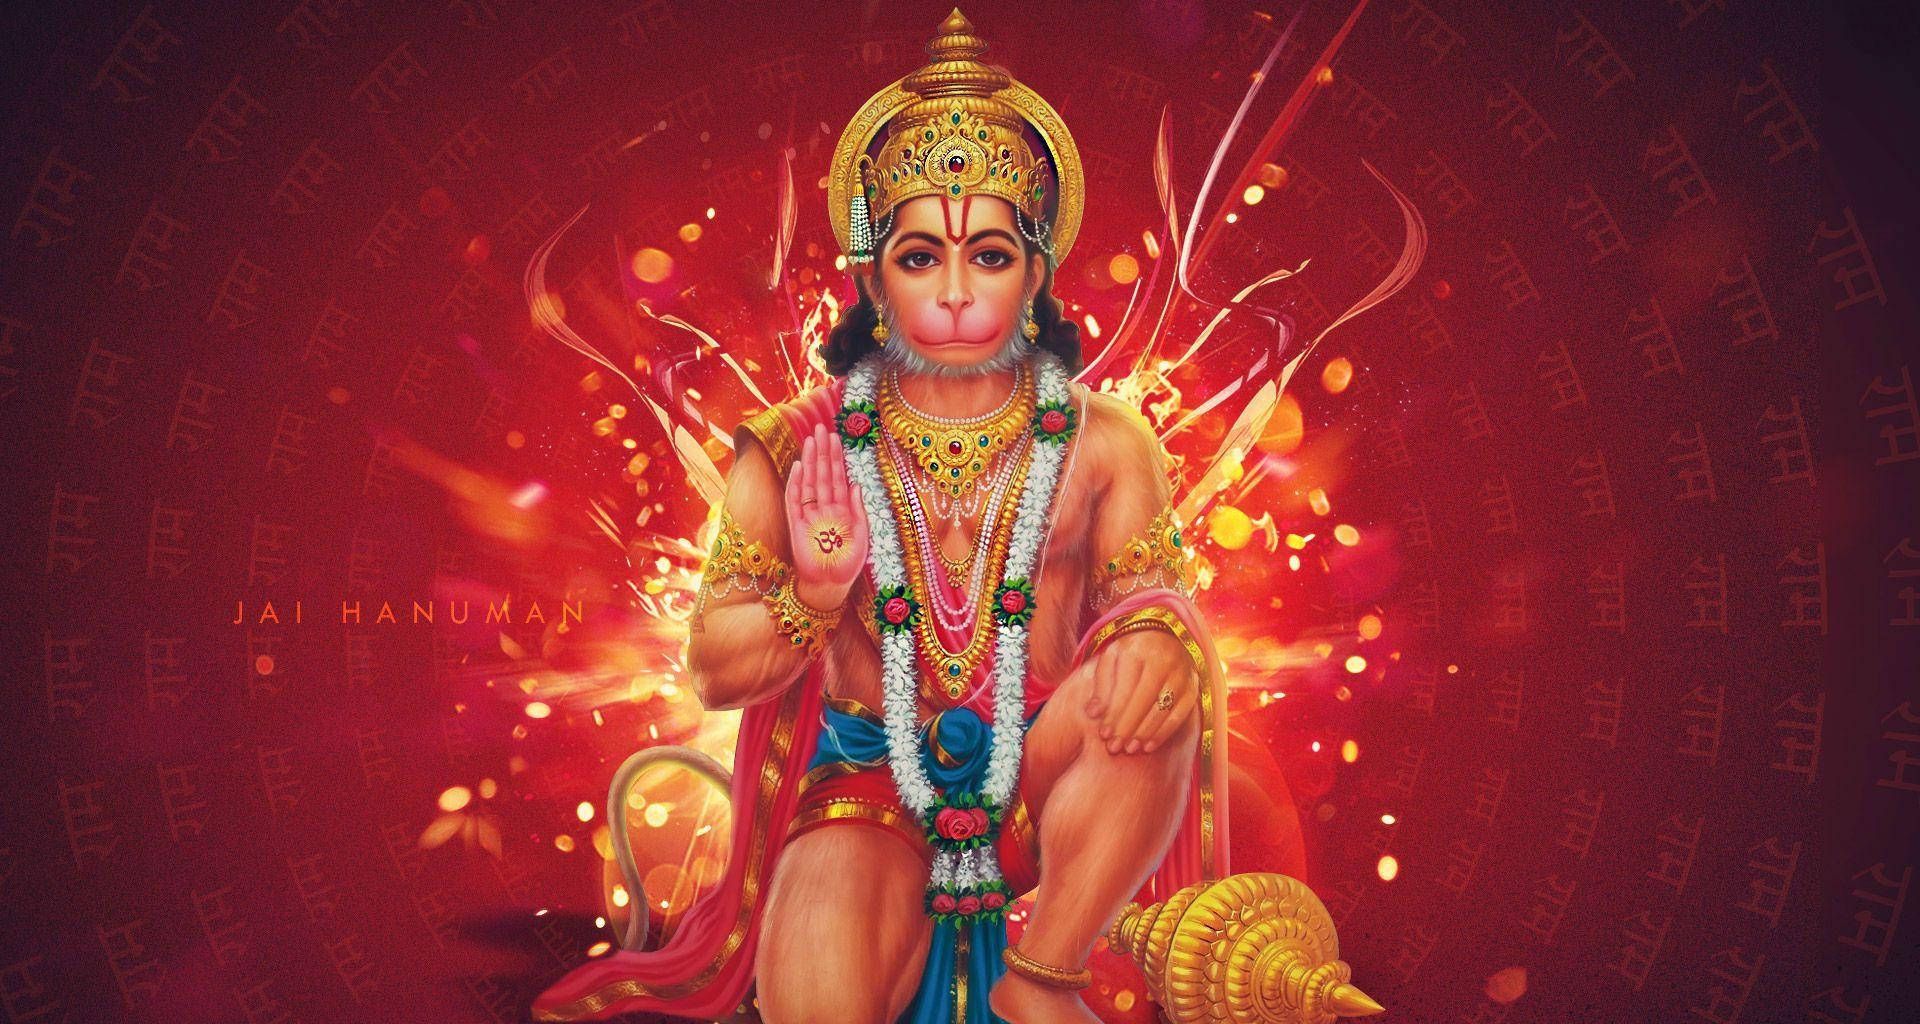 Jai Hanuman Hindi Alphabet Picture